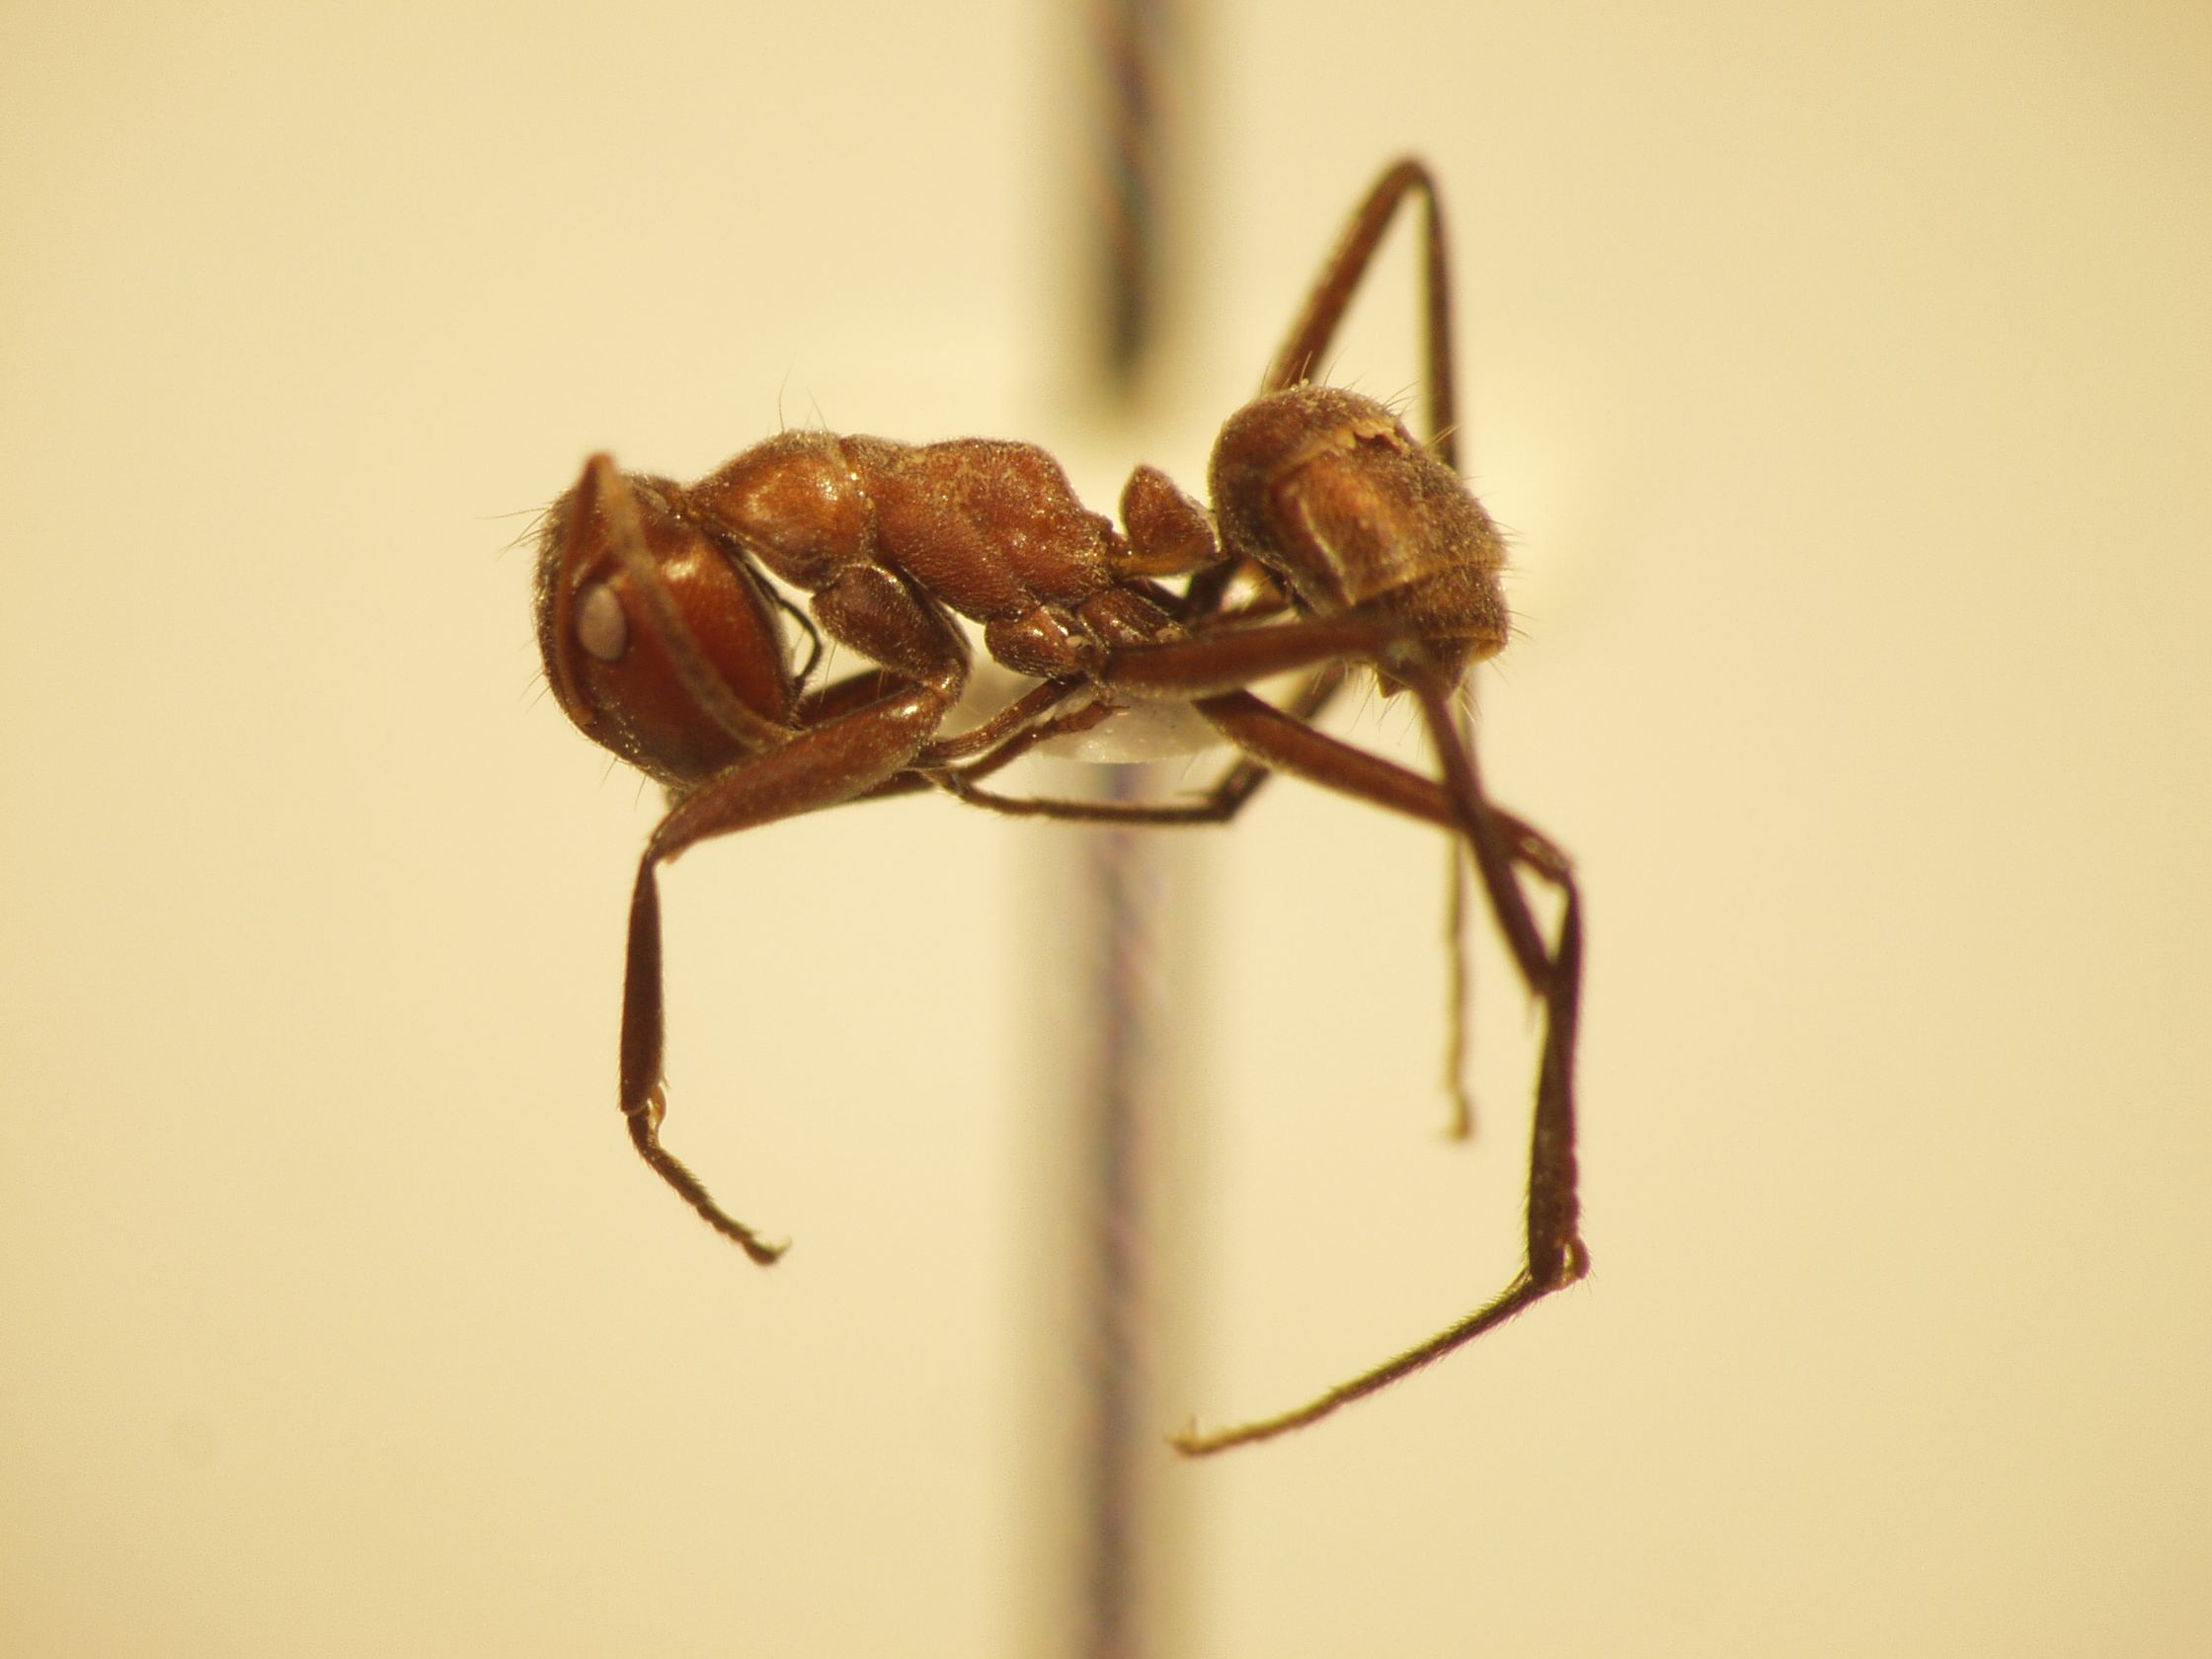 Camponotus 1 lateral